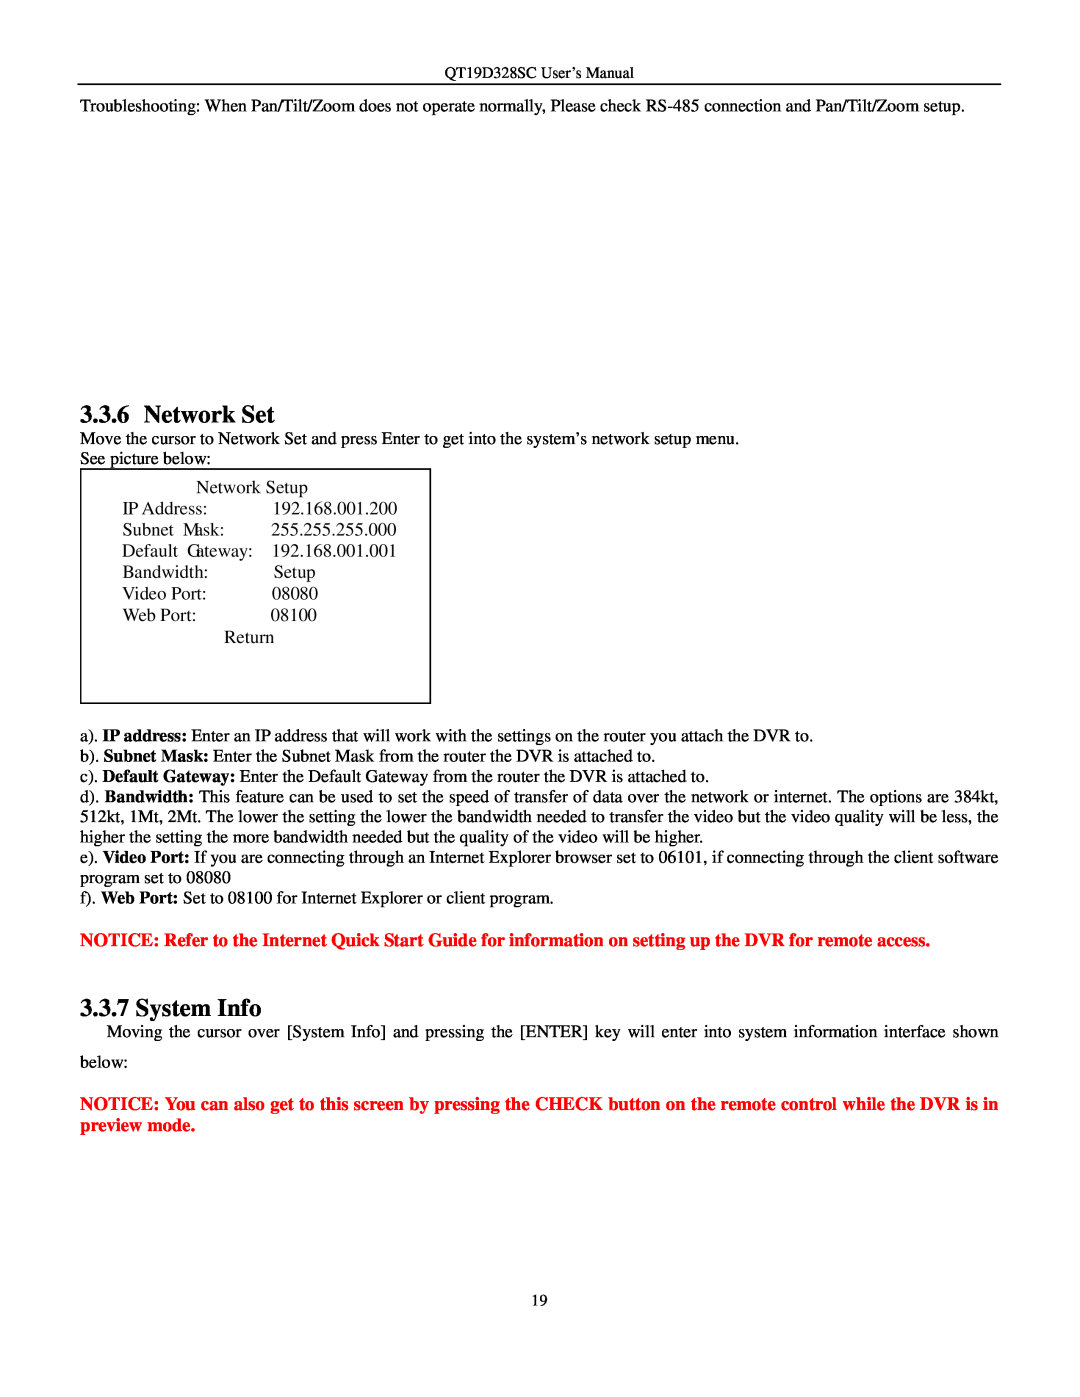 Q-See QT17D324SC user manual Network Set, System Info 